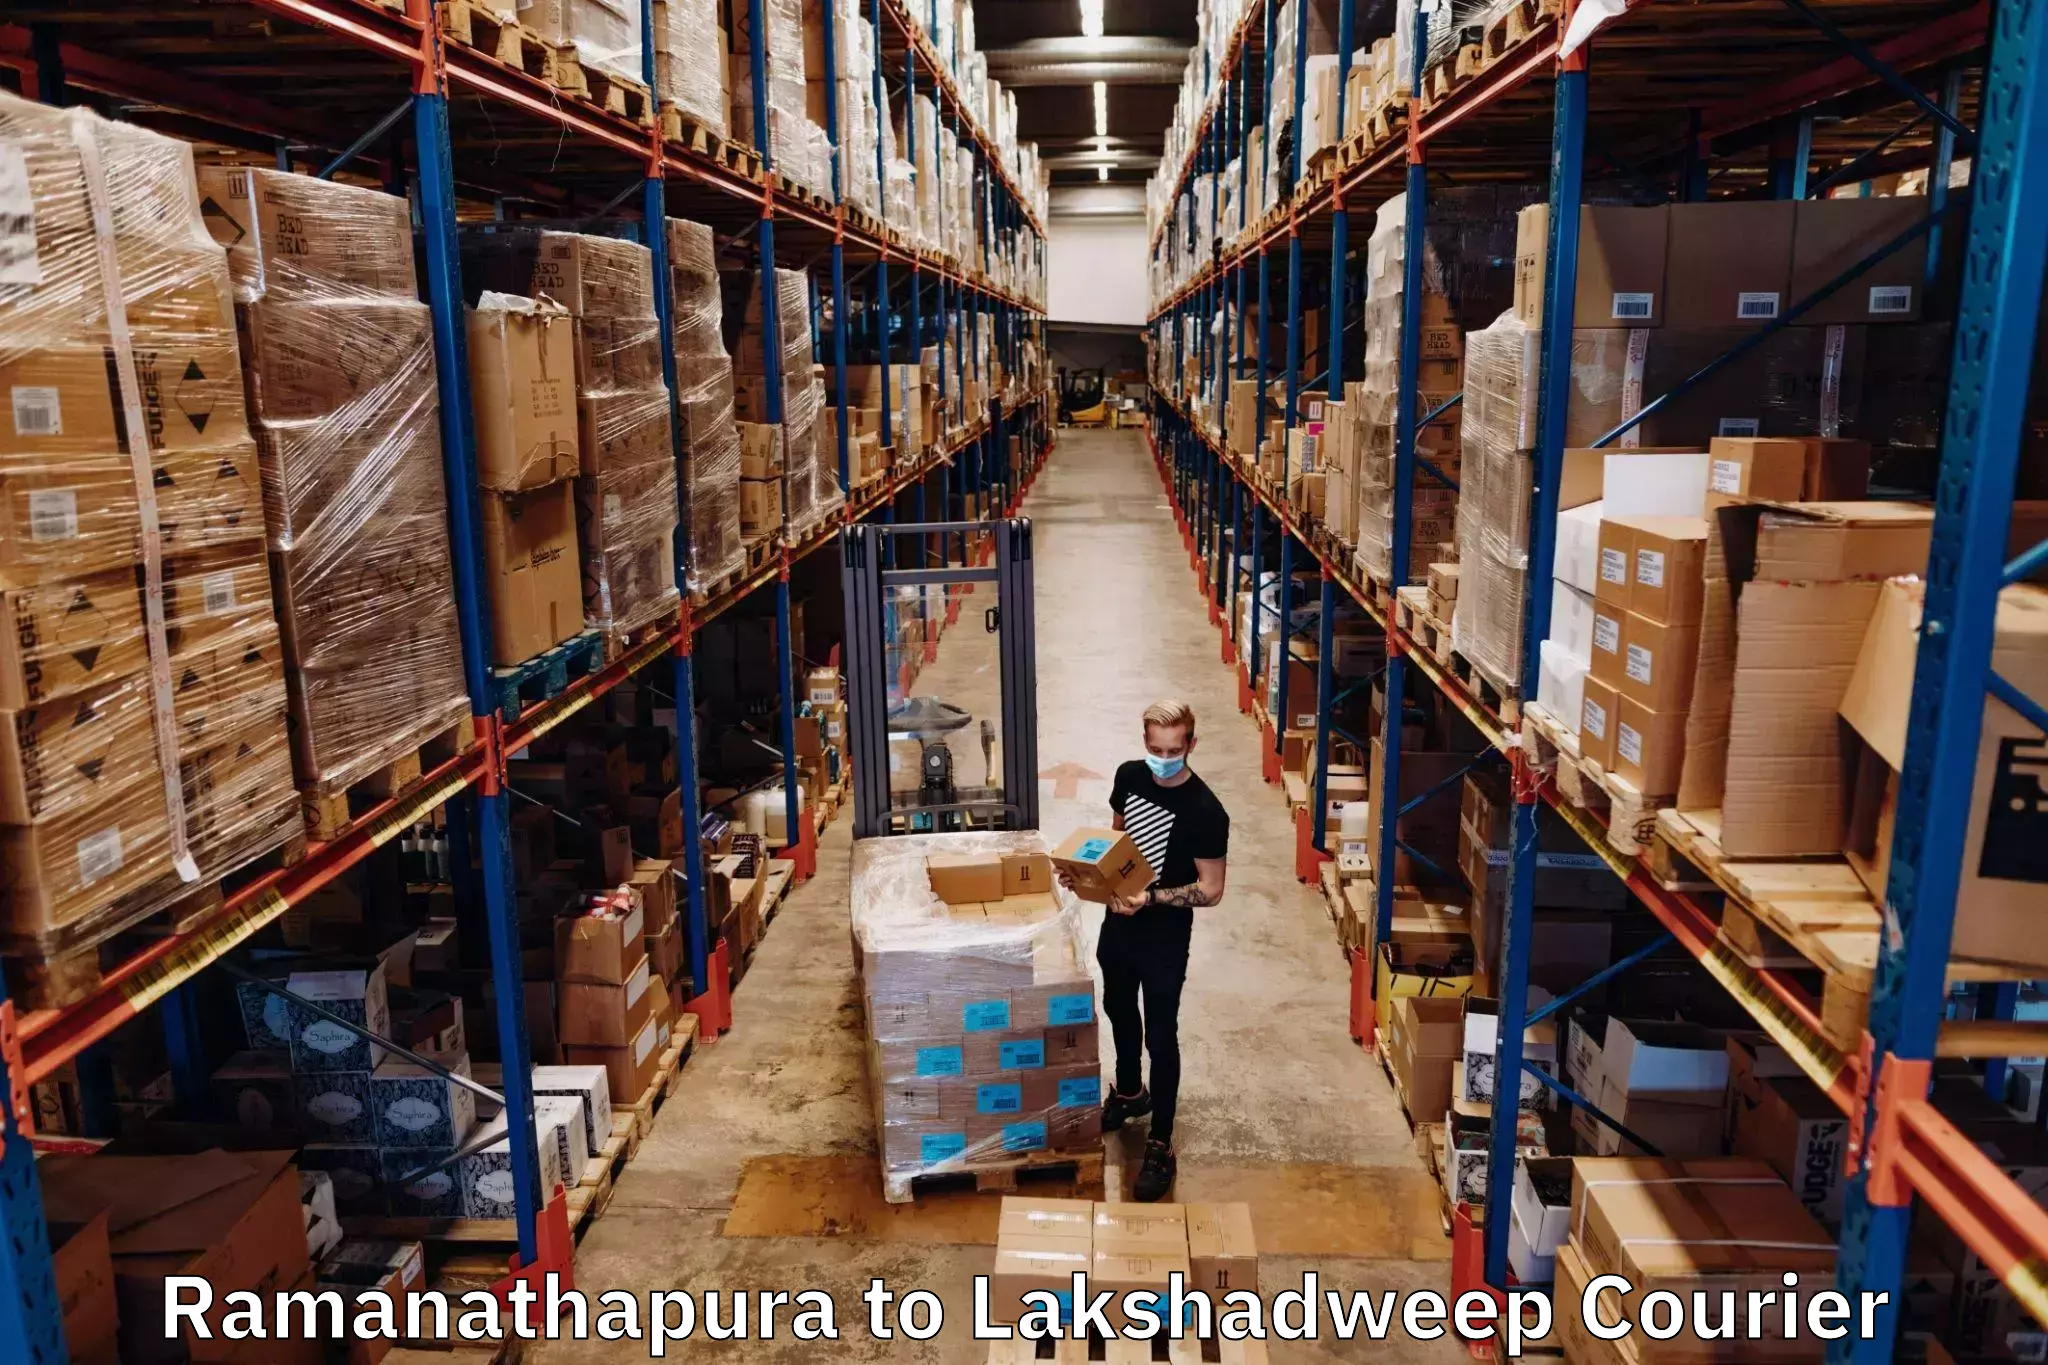 Weekend courier service Ramanathapura to Lakshadweep